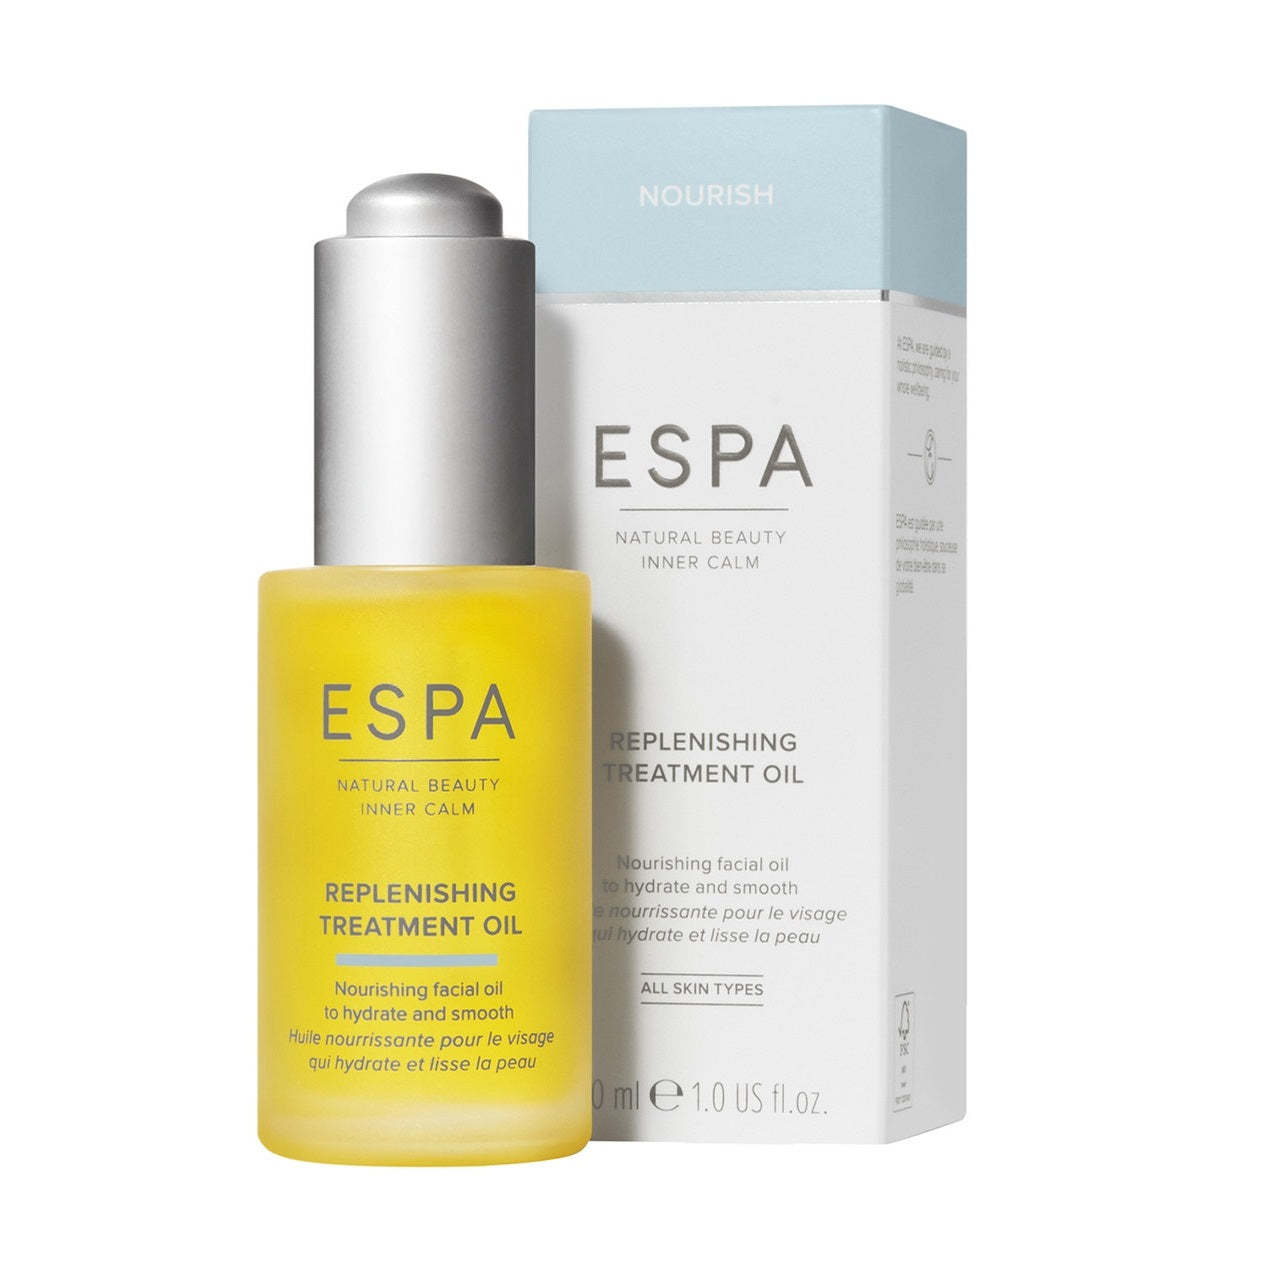 Espa Replenish Treatment Facial Oil 30ml